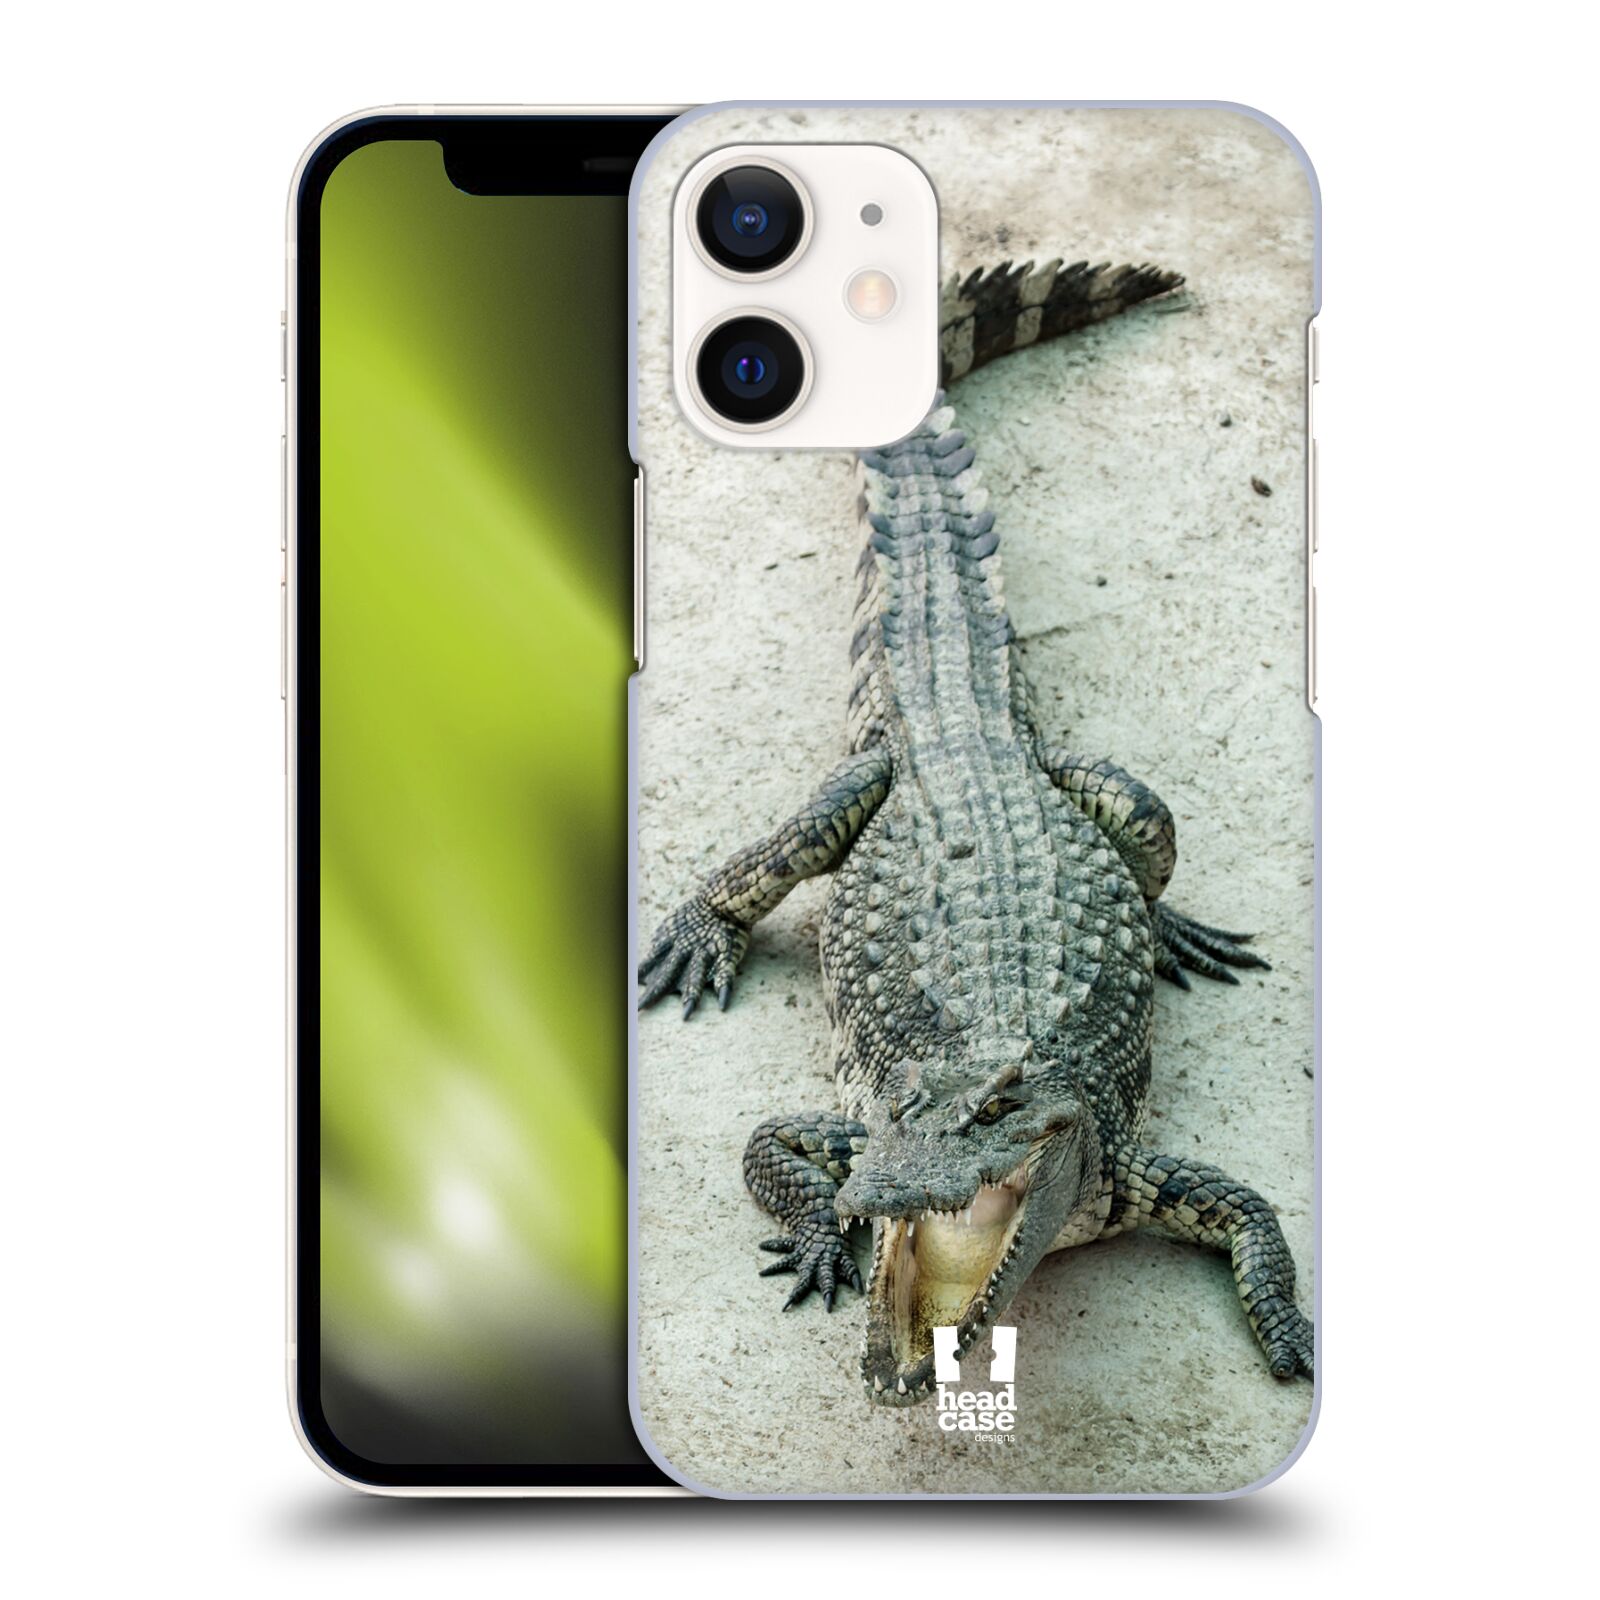 Plastový obal na mobil Apple Iphone 12 MINI vzor Divočina, Divoký život a zvířata foto KROKODÝL, KAJMAN